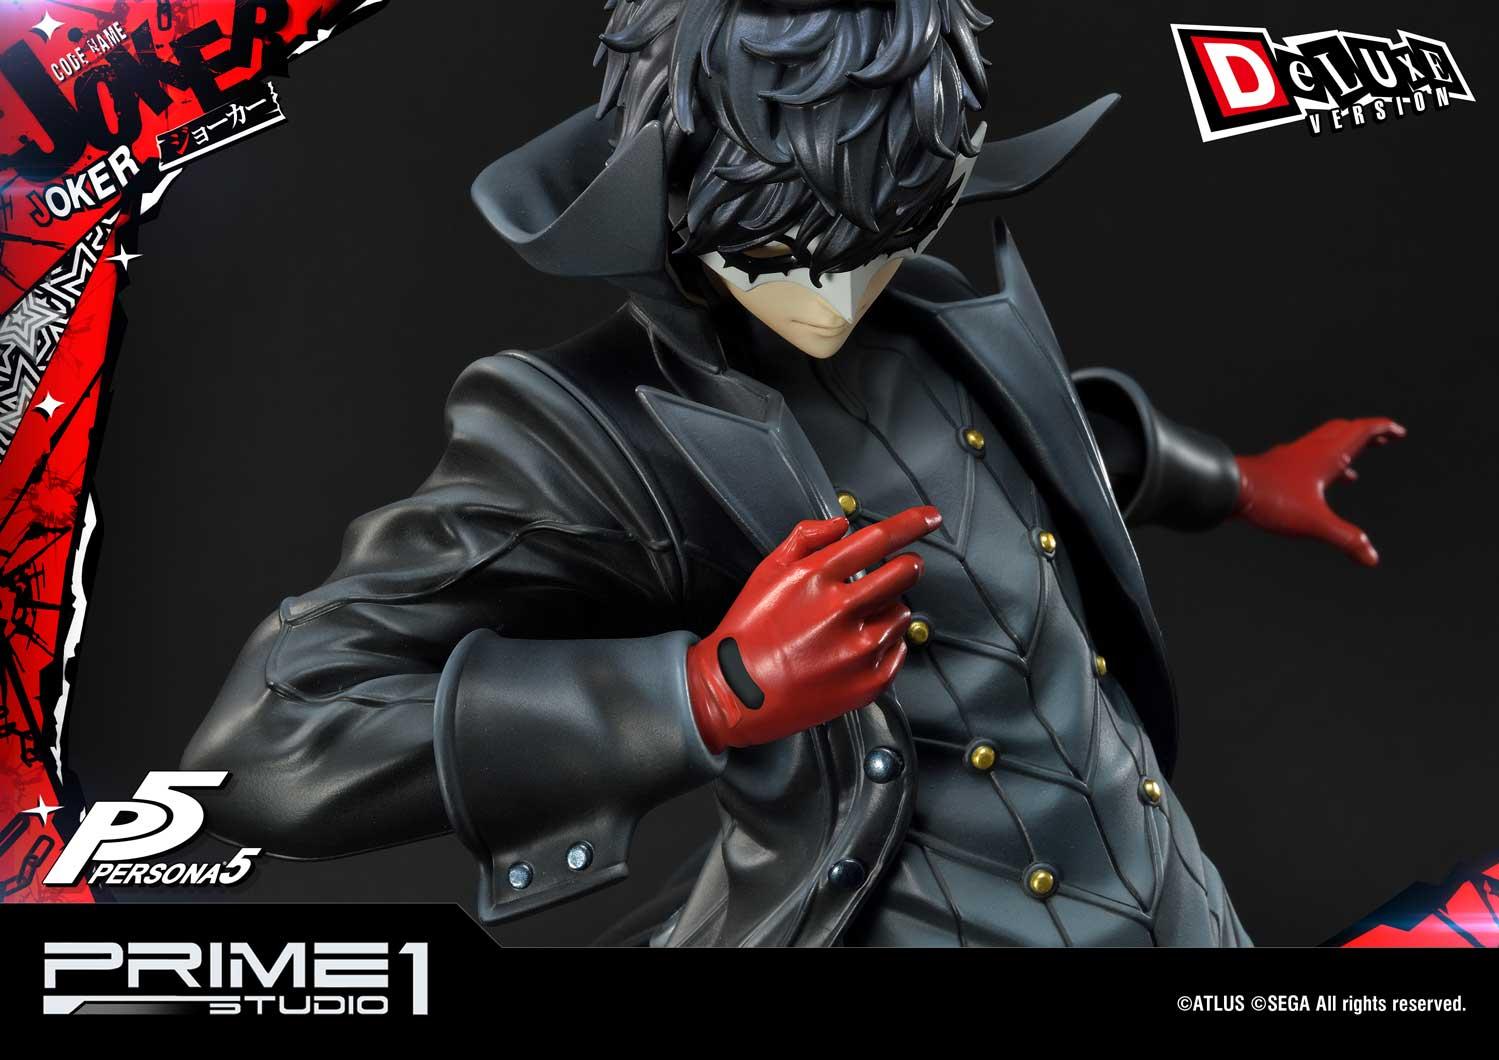 Persona 5 Protagonist Joker Prime 1 Studio Statue Announced for Late 2021,  Pre-Orders Open, Pictures Released - Persona Central